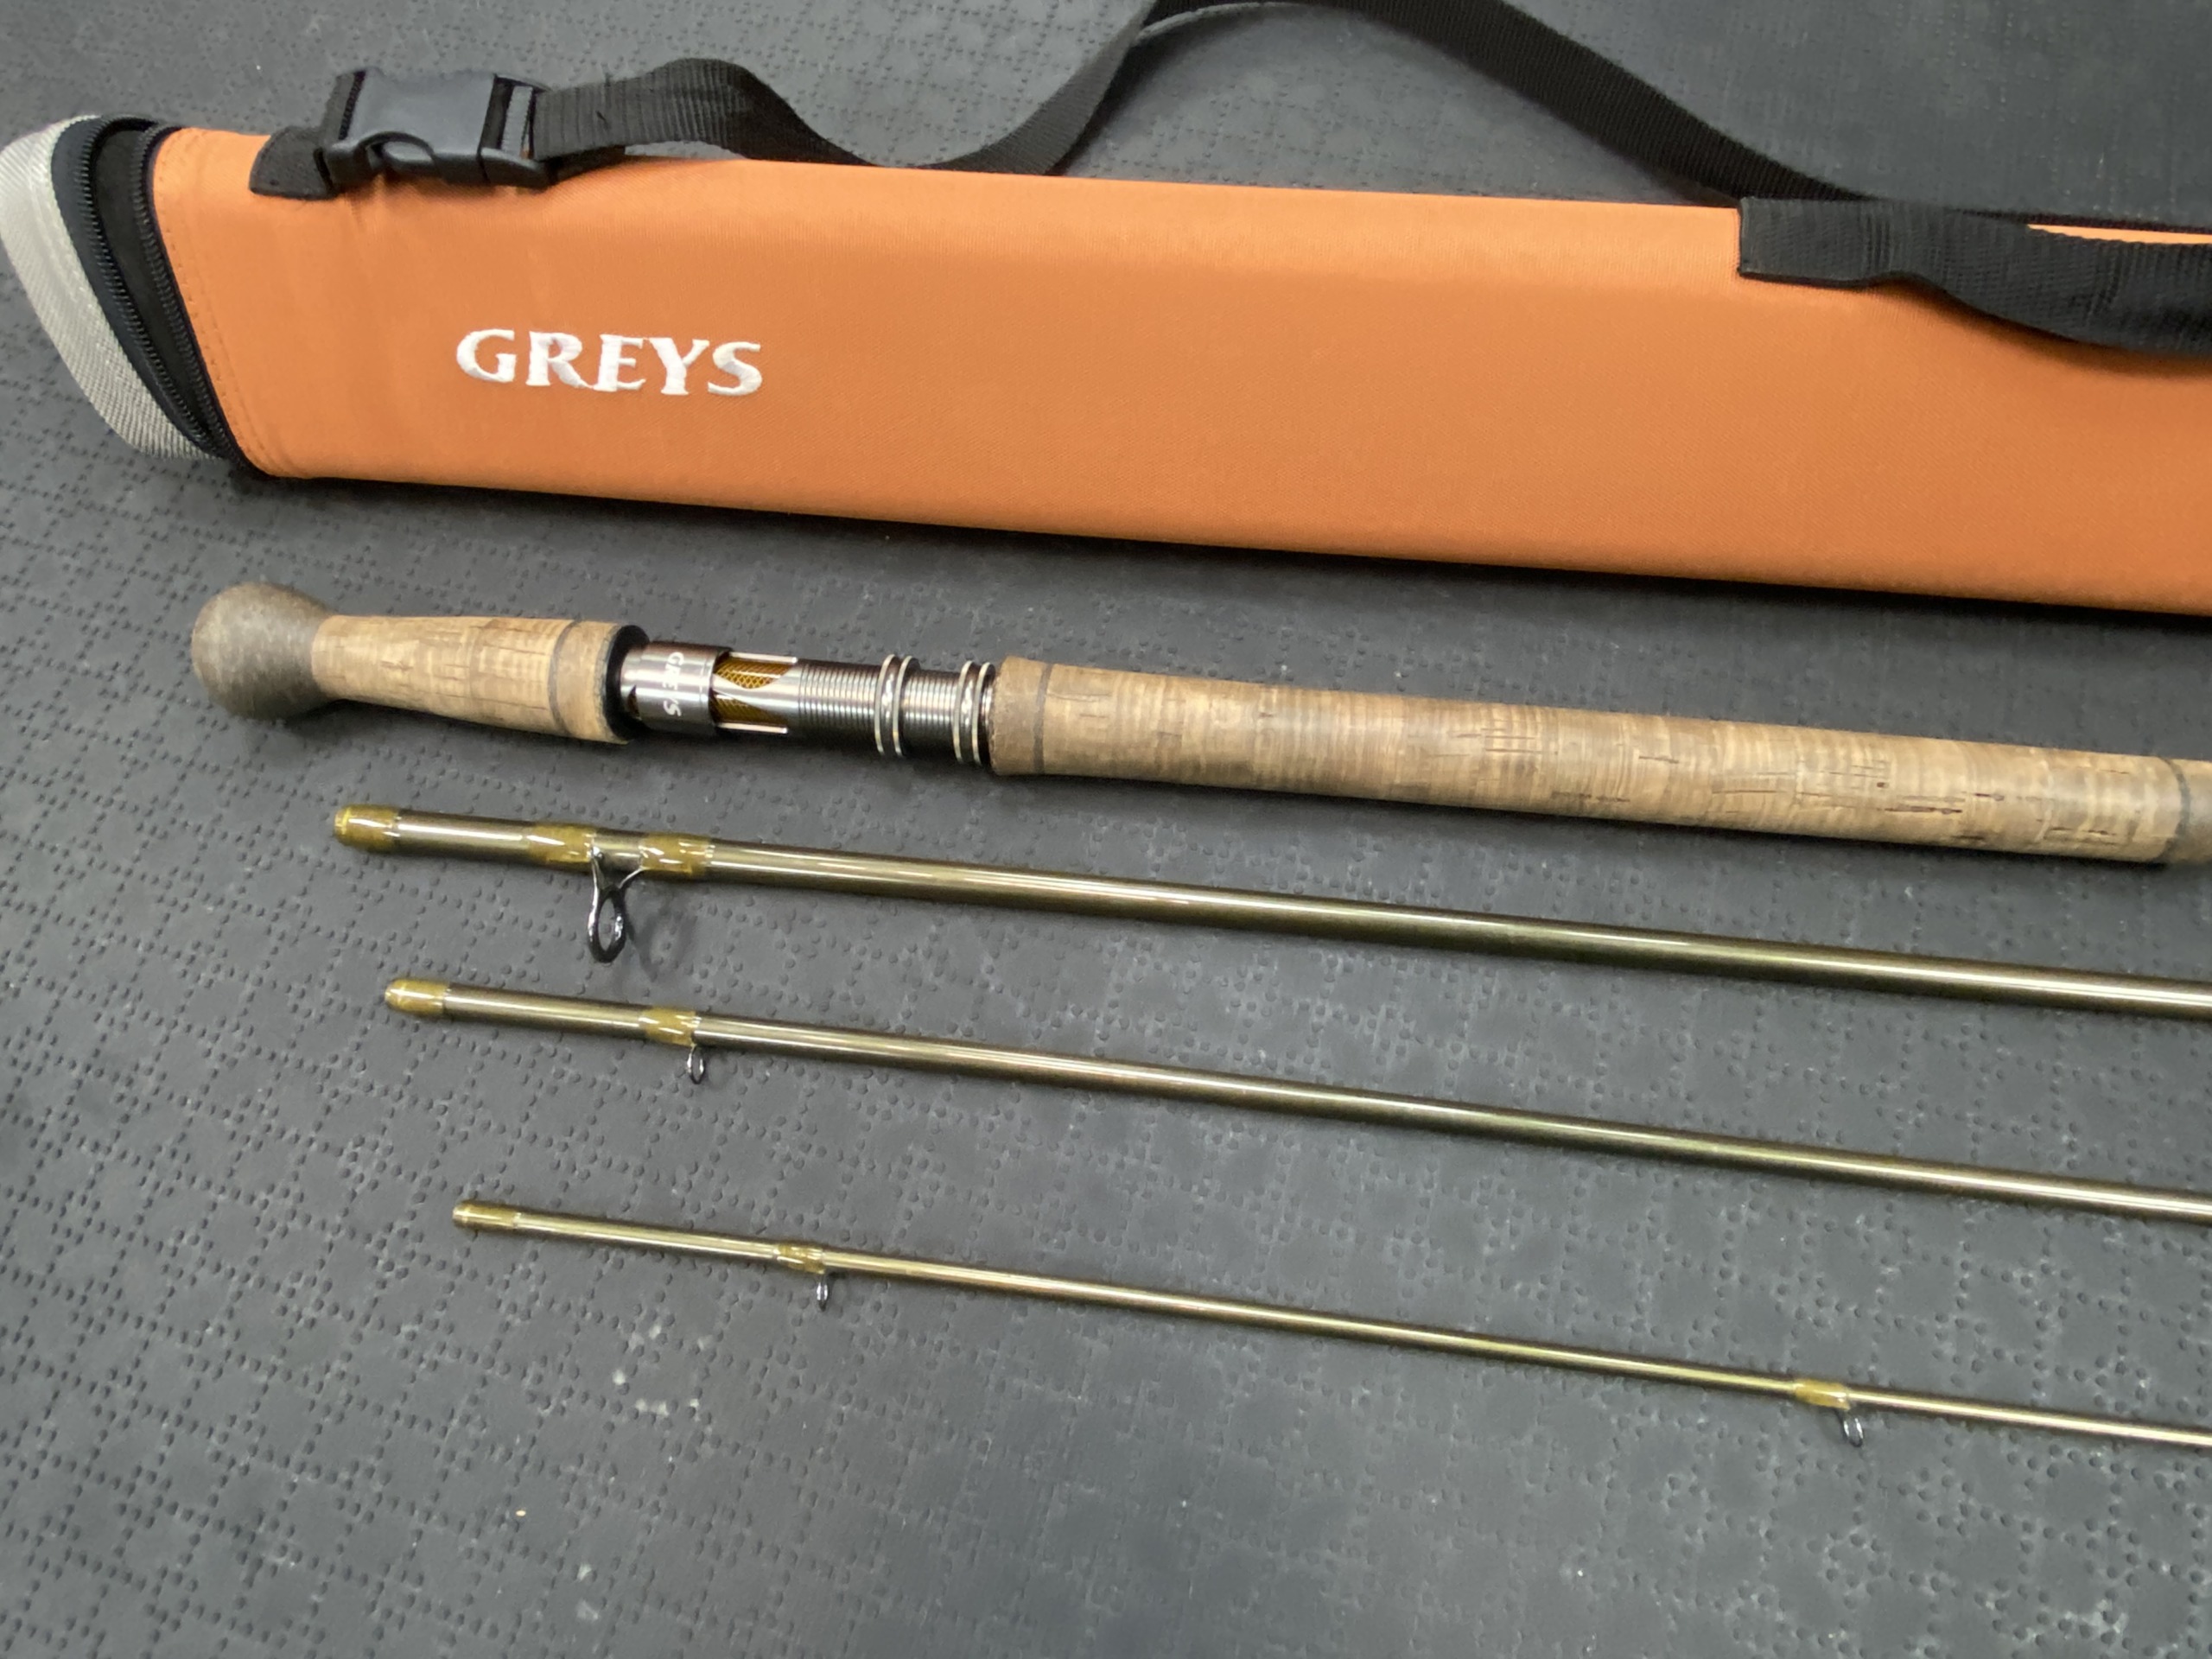 Greys - XF2 - S-Series - GRXF 140 - 13' - 4PC - 8WT Spey Rod - GREAT SHAPE! - $200